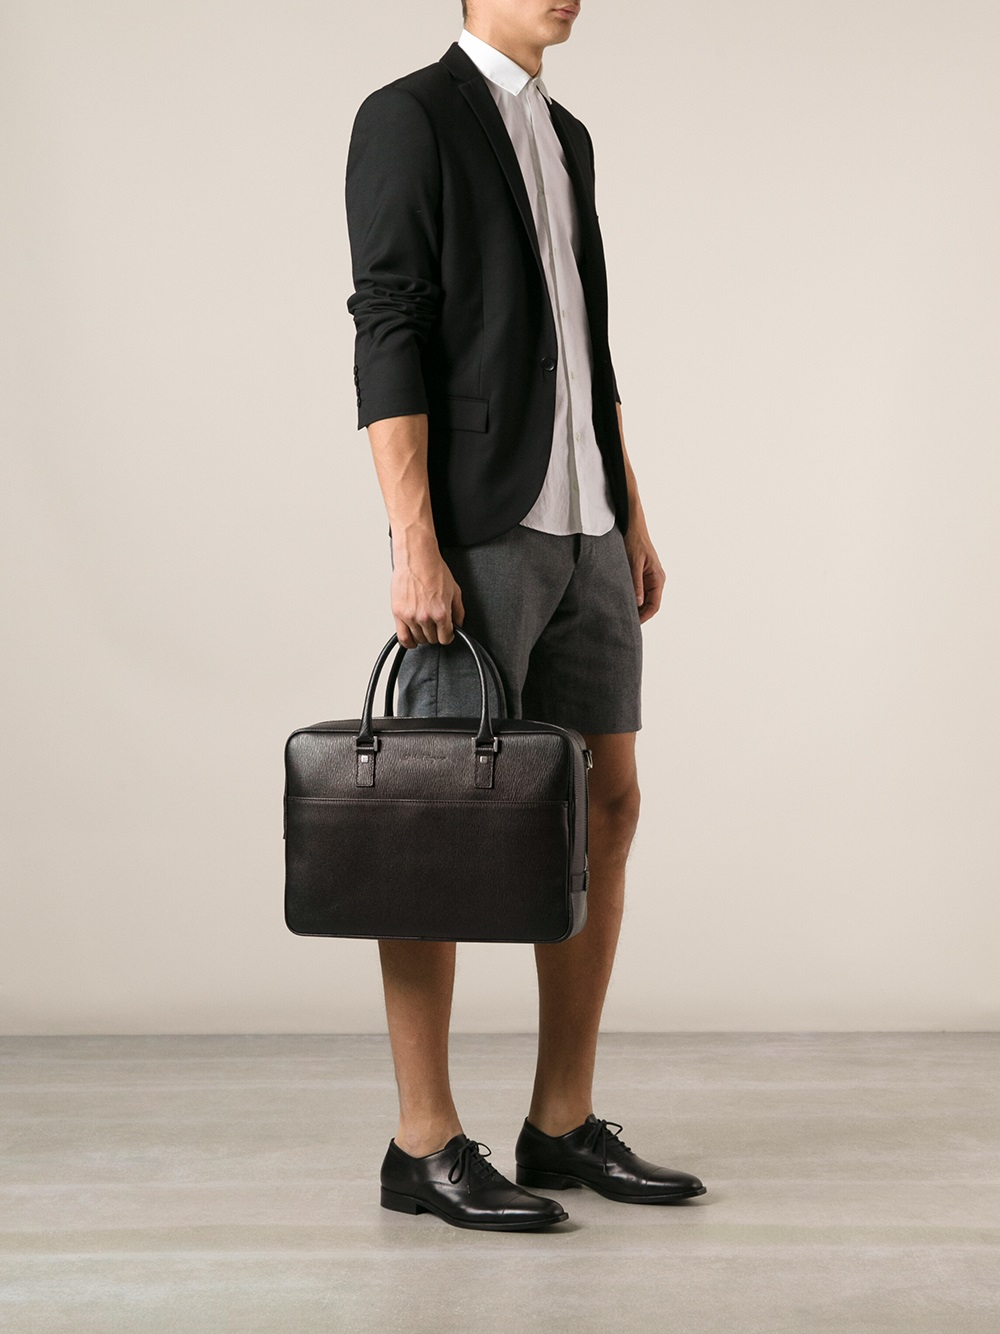 Ferragamo Laptop Bag in Black for Men - Lyst